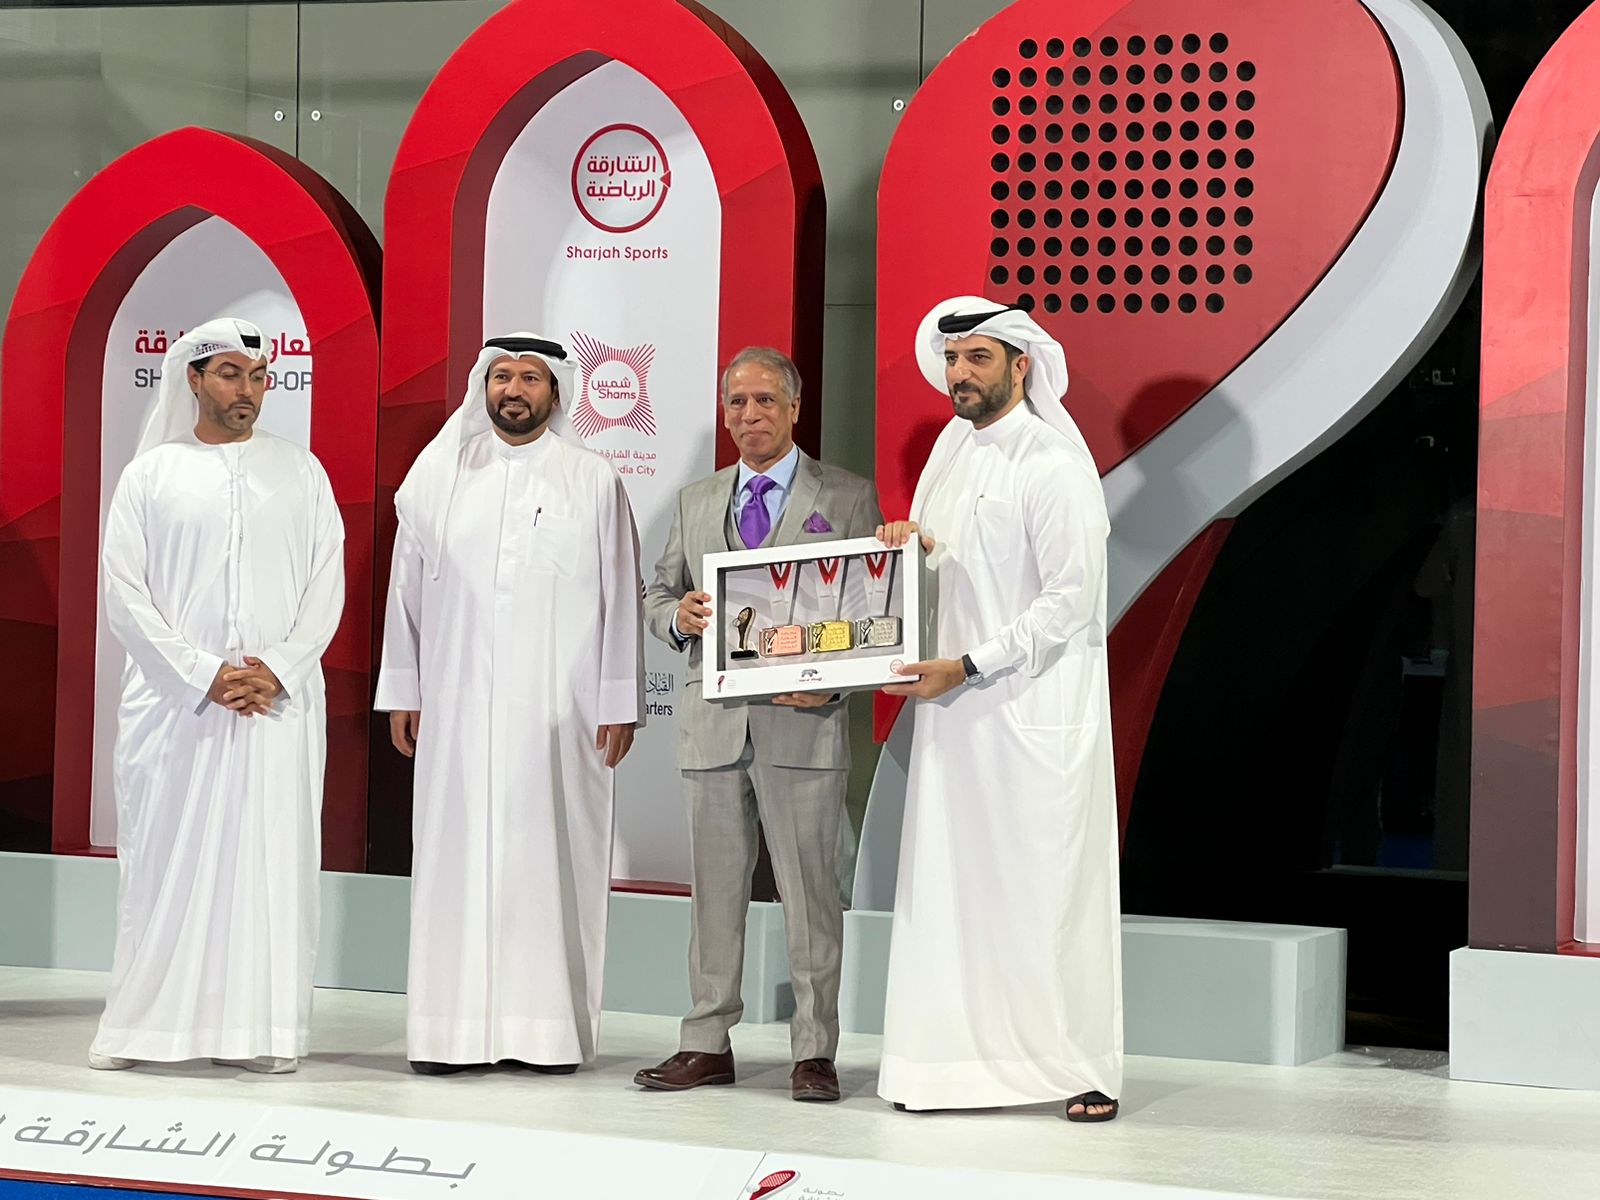 Connecting with dignitaries at the Sharjah Sports championship